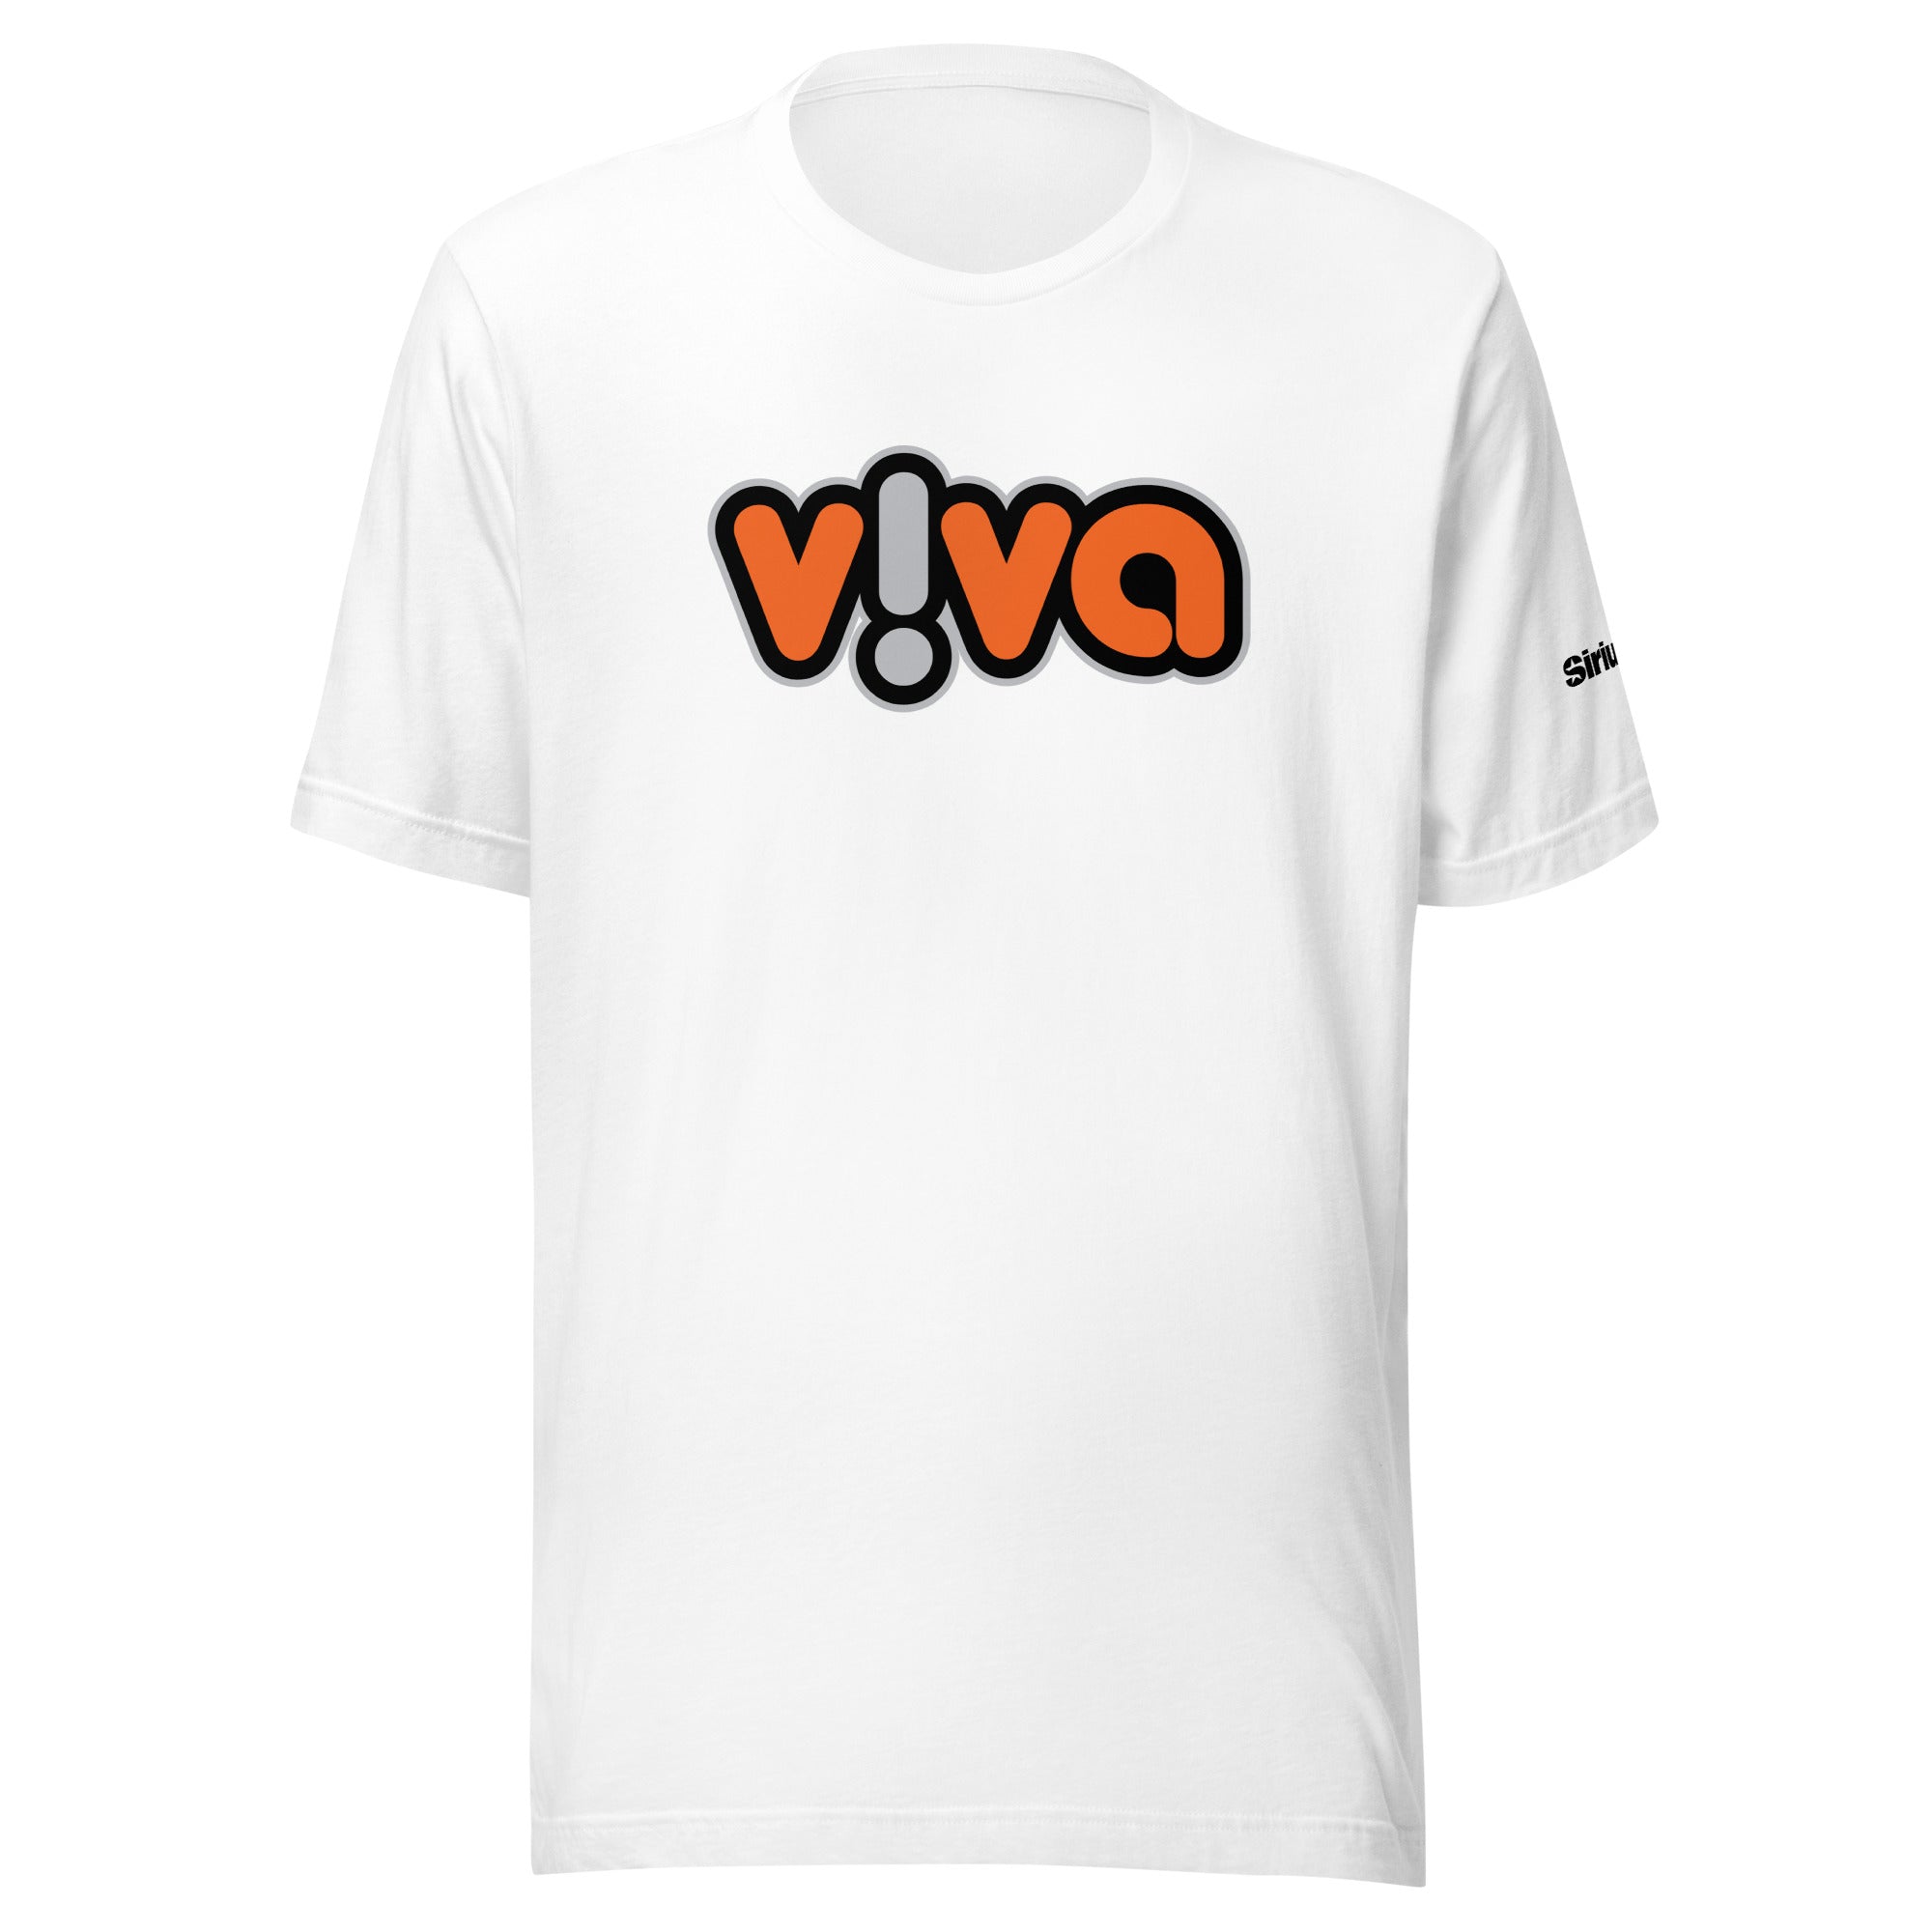 Viva: T-shirt (White)